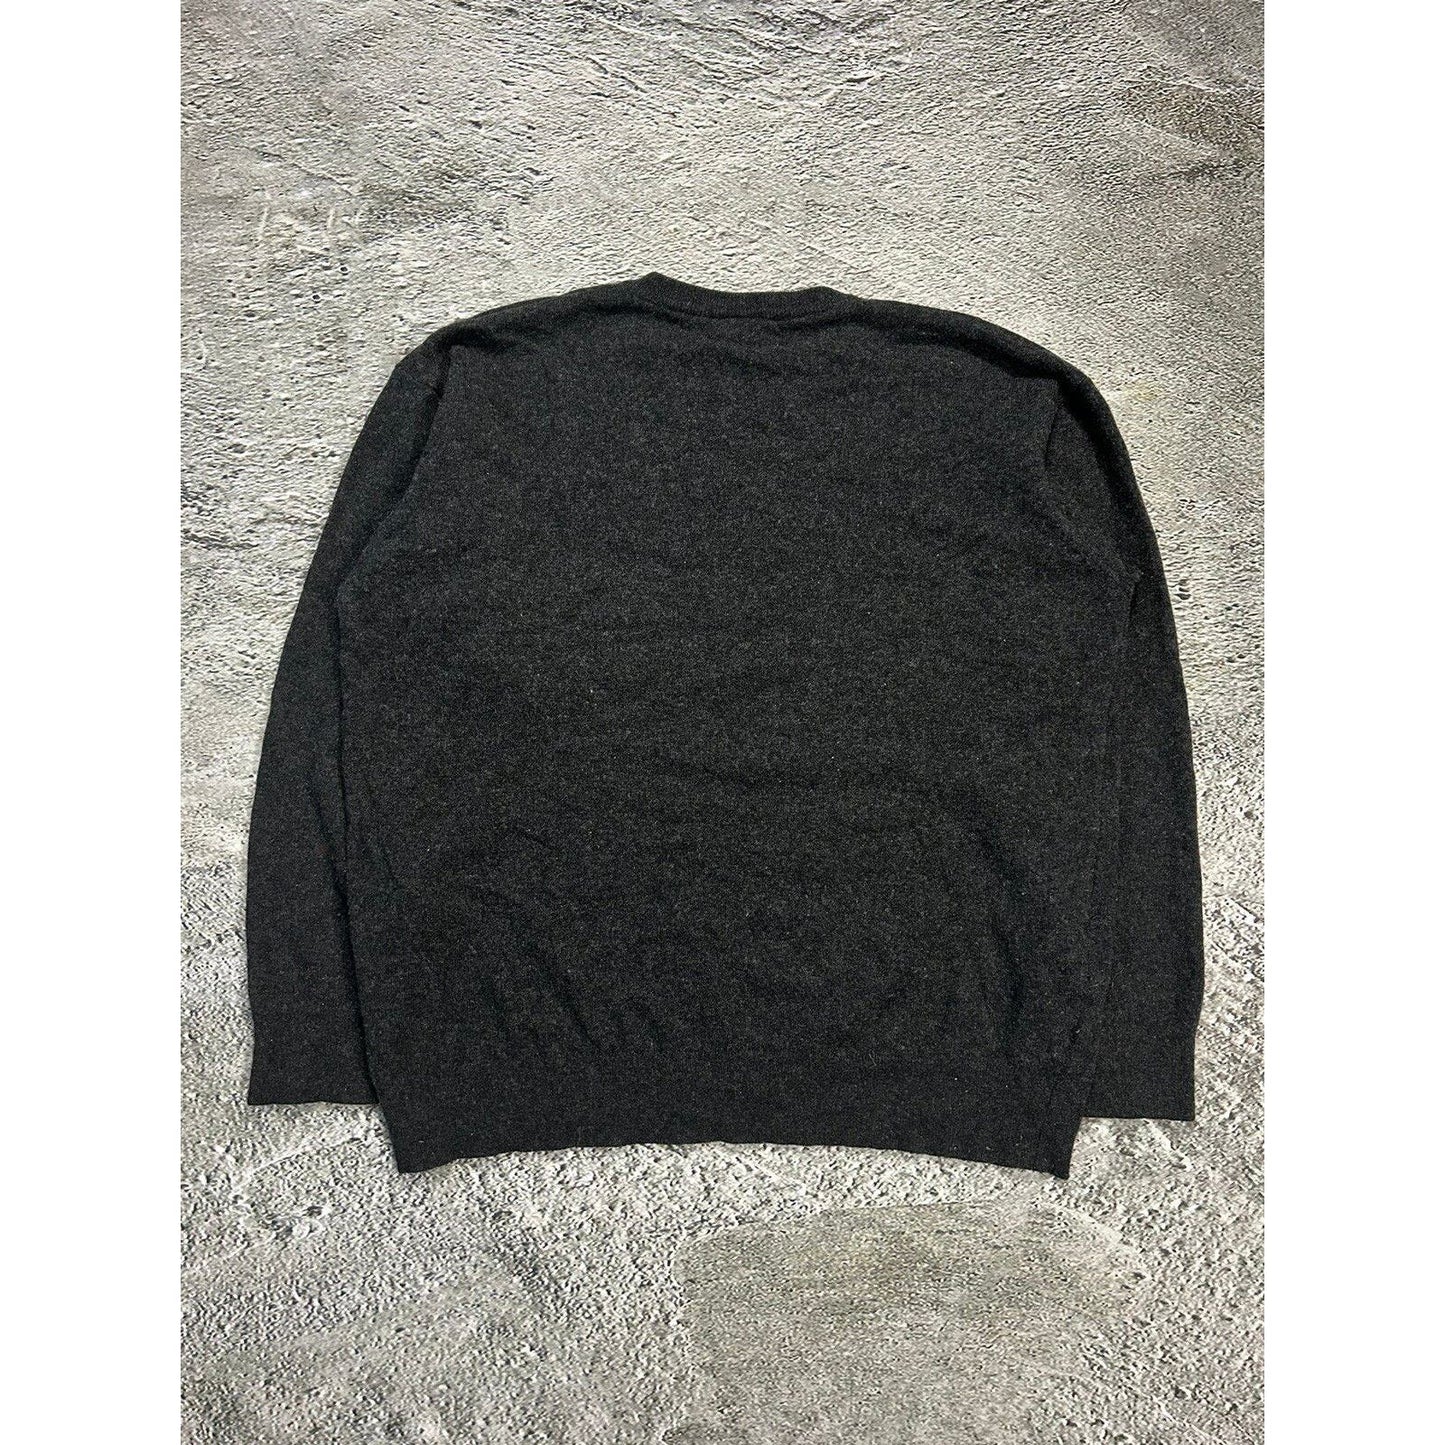 Lacoste sweater wool vintage dark grey small logo